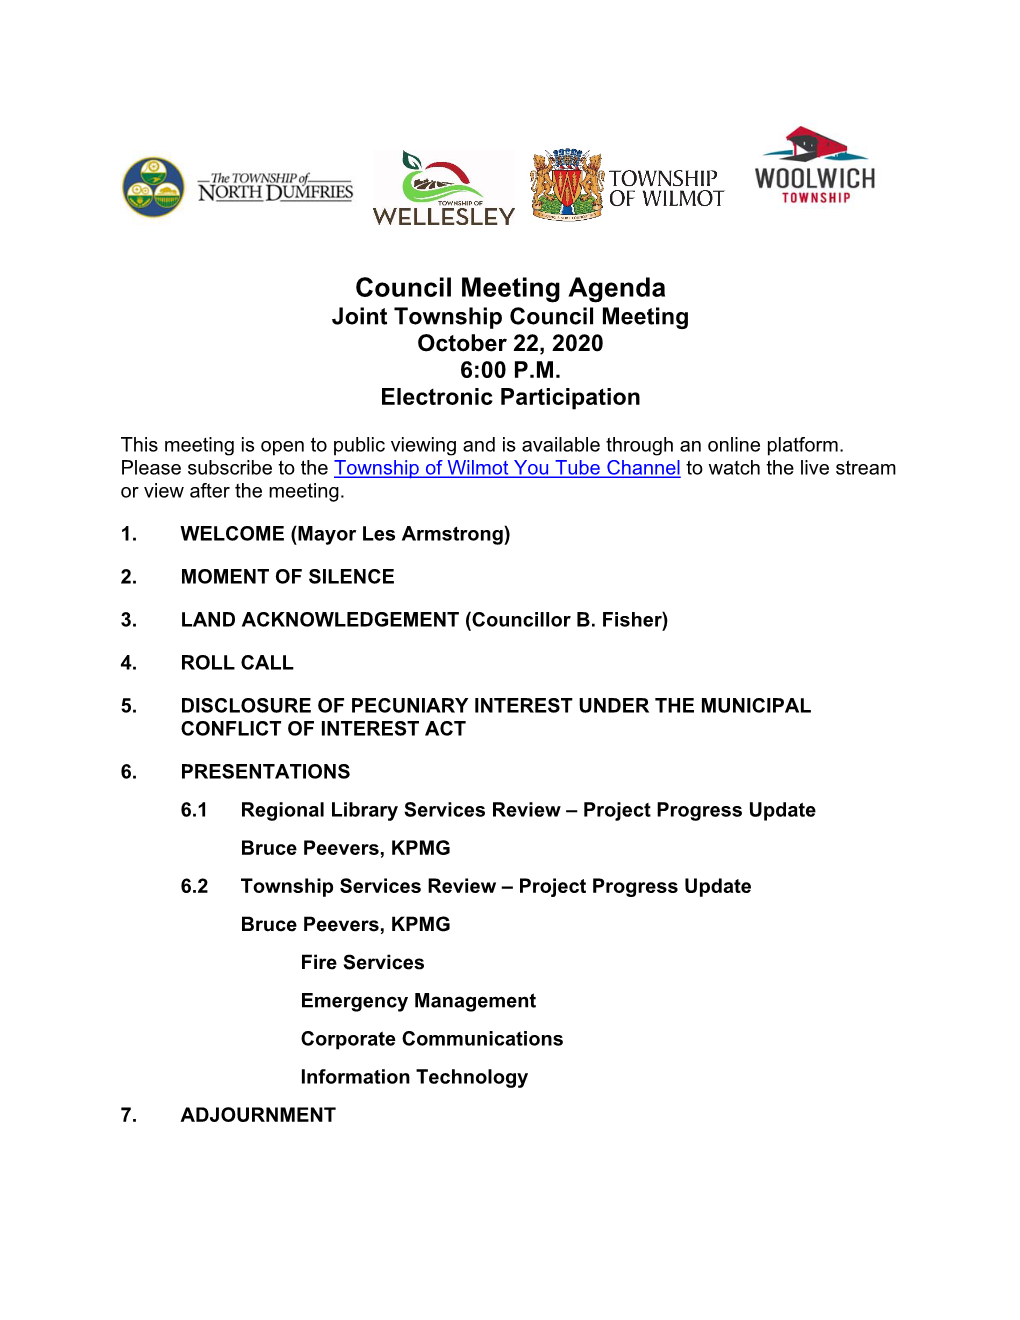 Council Meeting Agenda Joint Township Council Meeting October 22, 2020 6:00 P.M